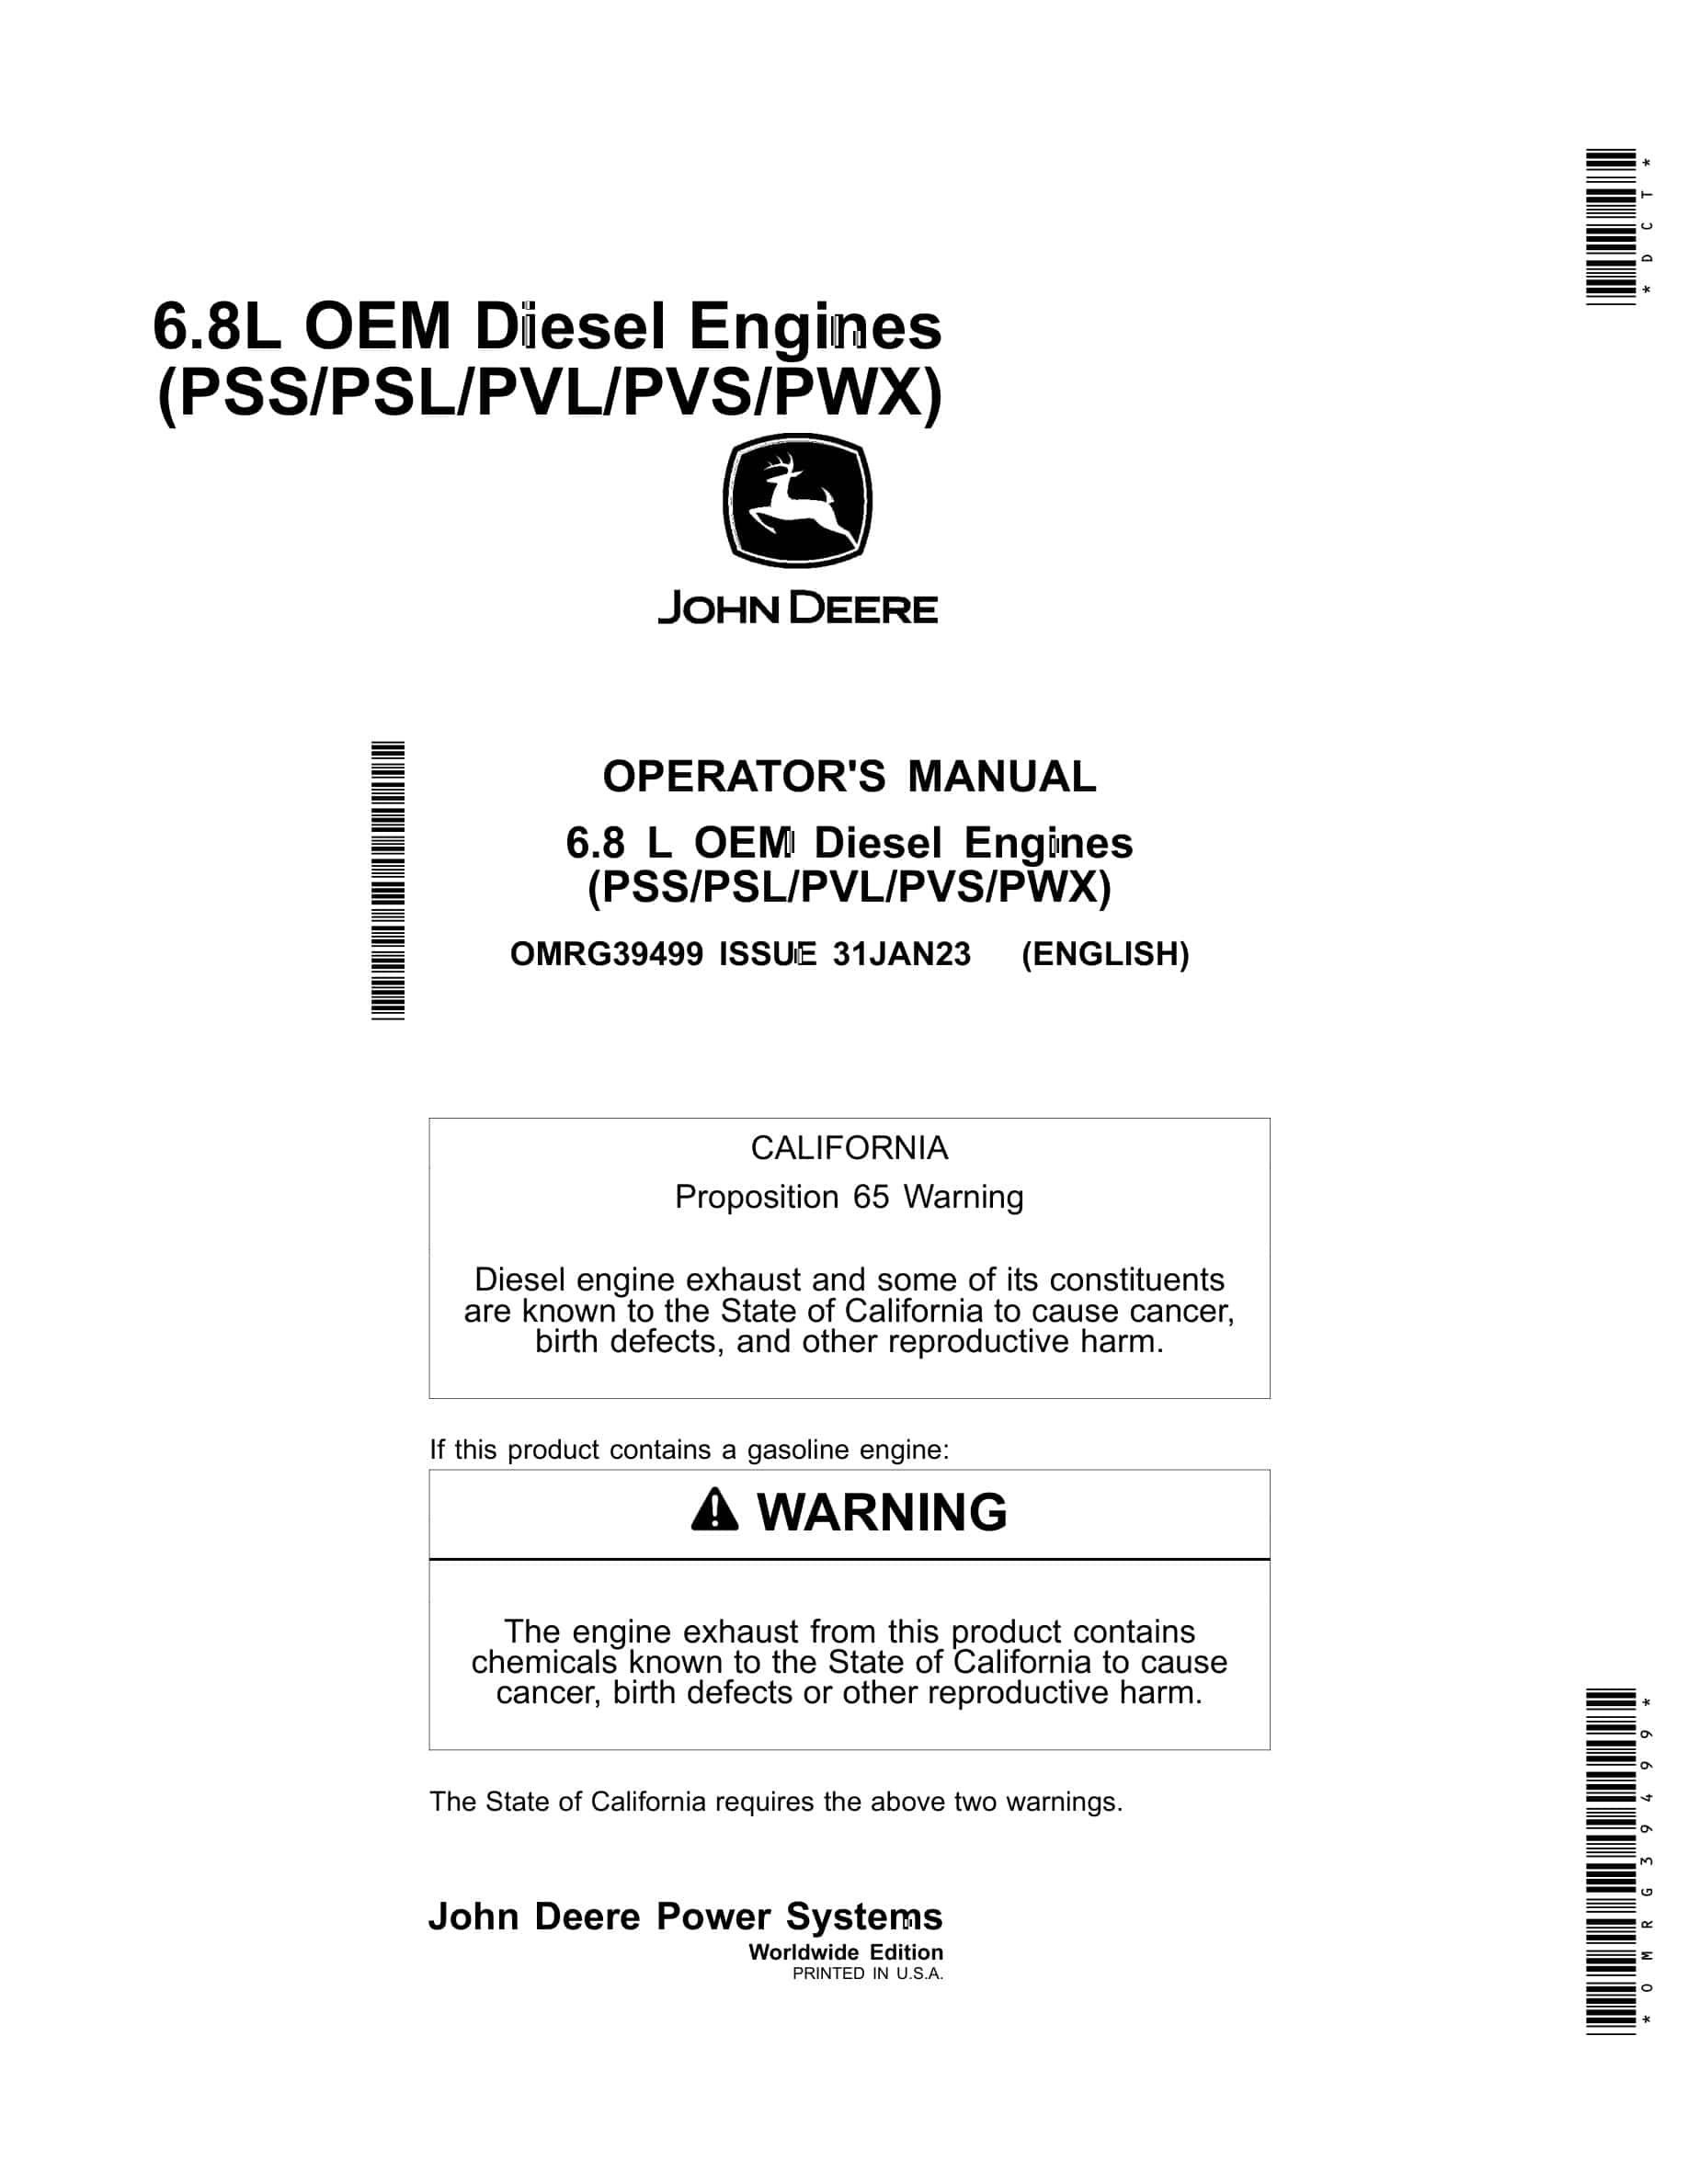 John Deere PowerTech 6.8 L OEM (PSS PSL PVL PVS PWX) Diesel Engines Operator Manual OMRG39499-1